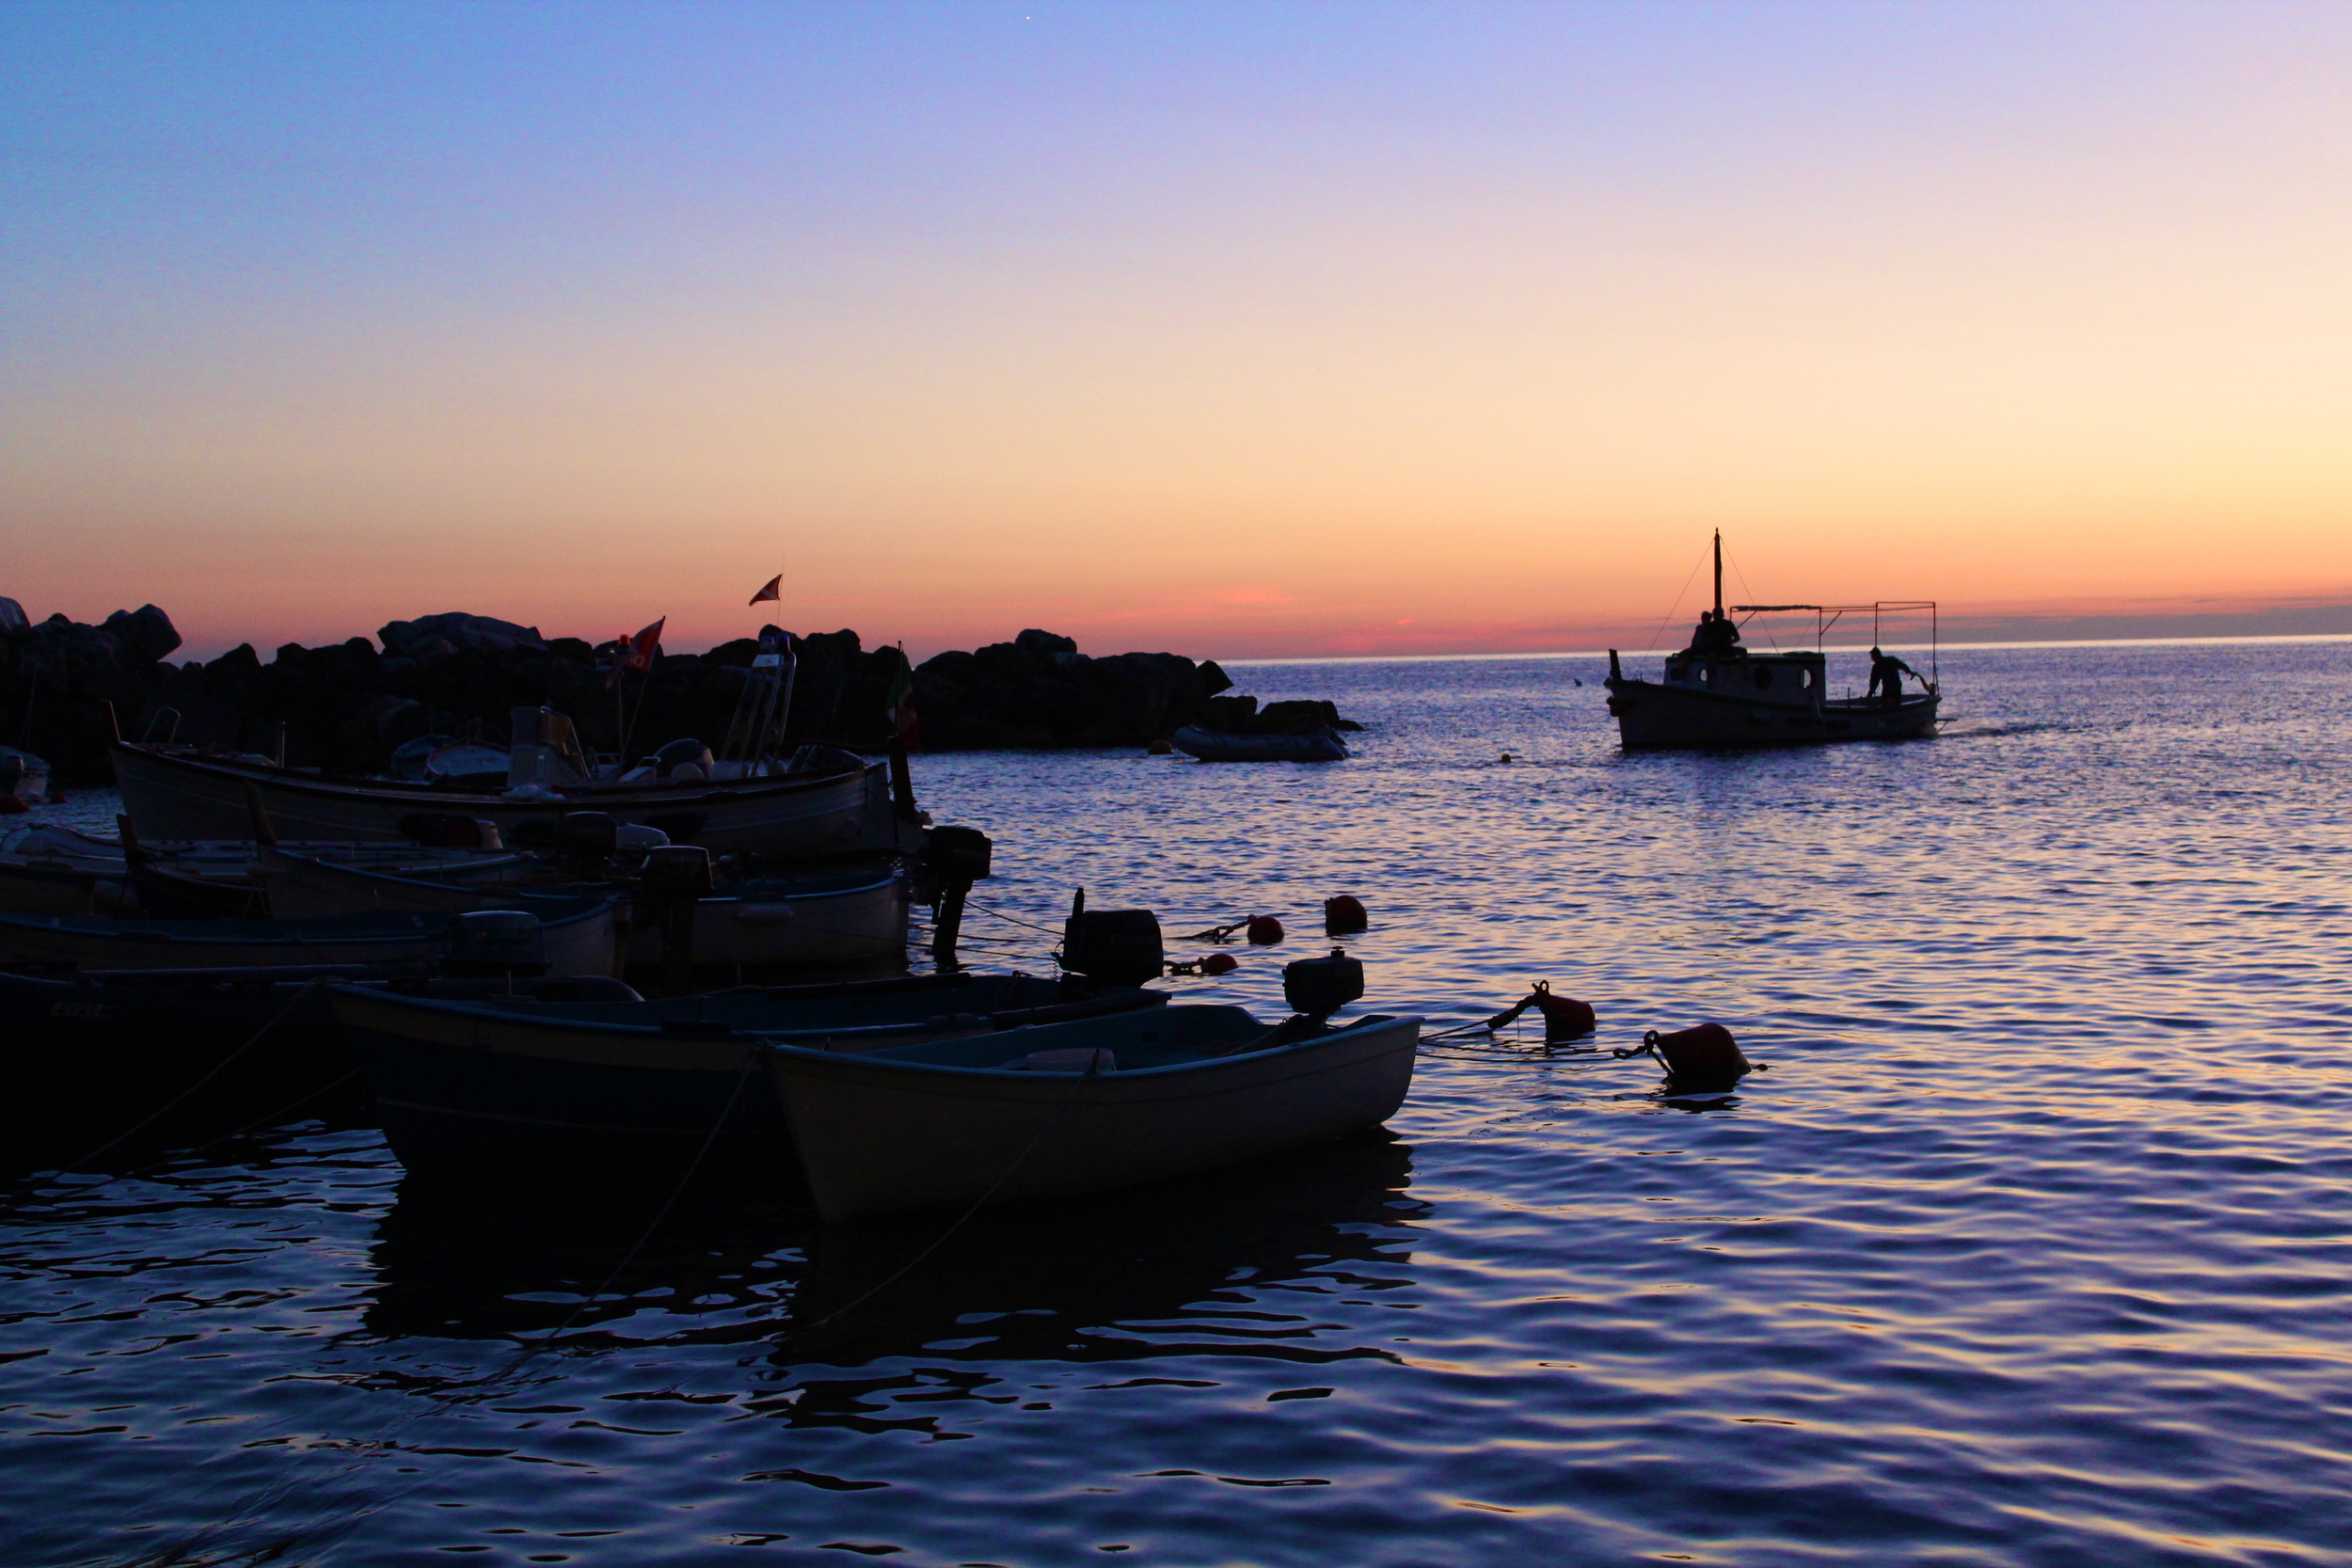 Kaci Nicole - Sunset in Cinque Terre